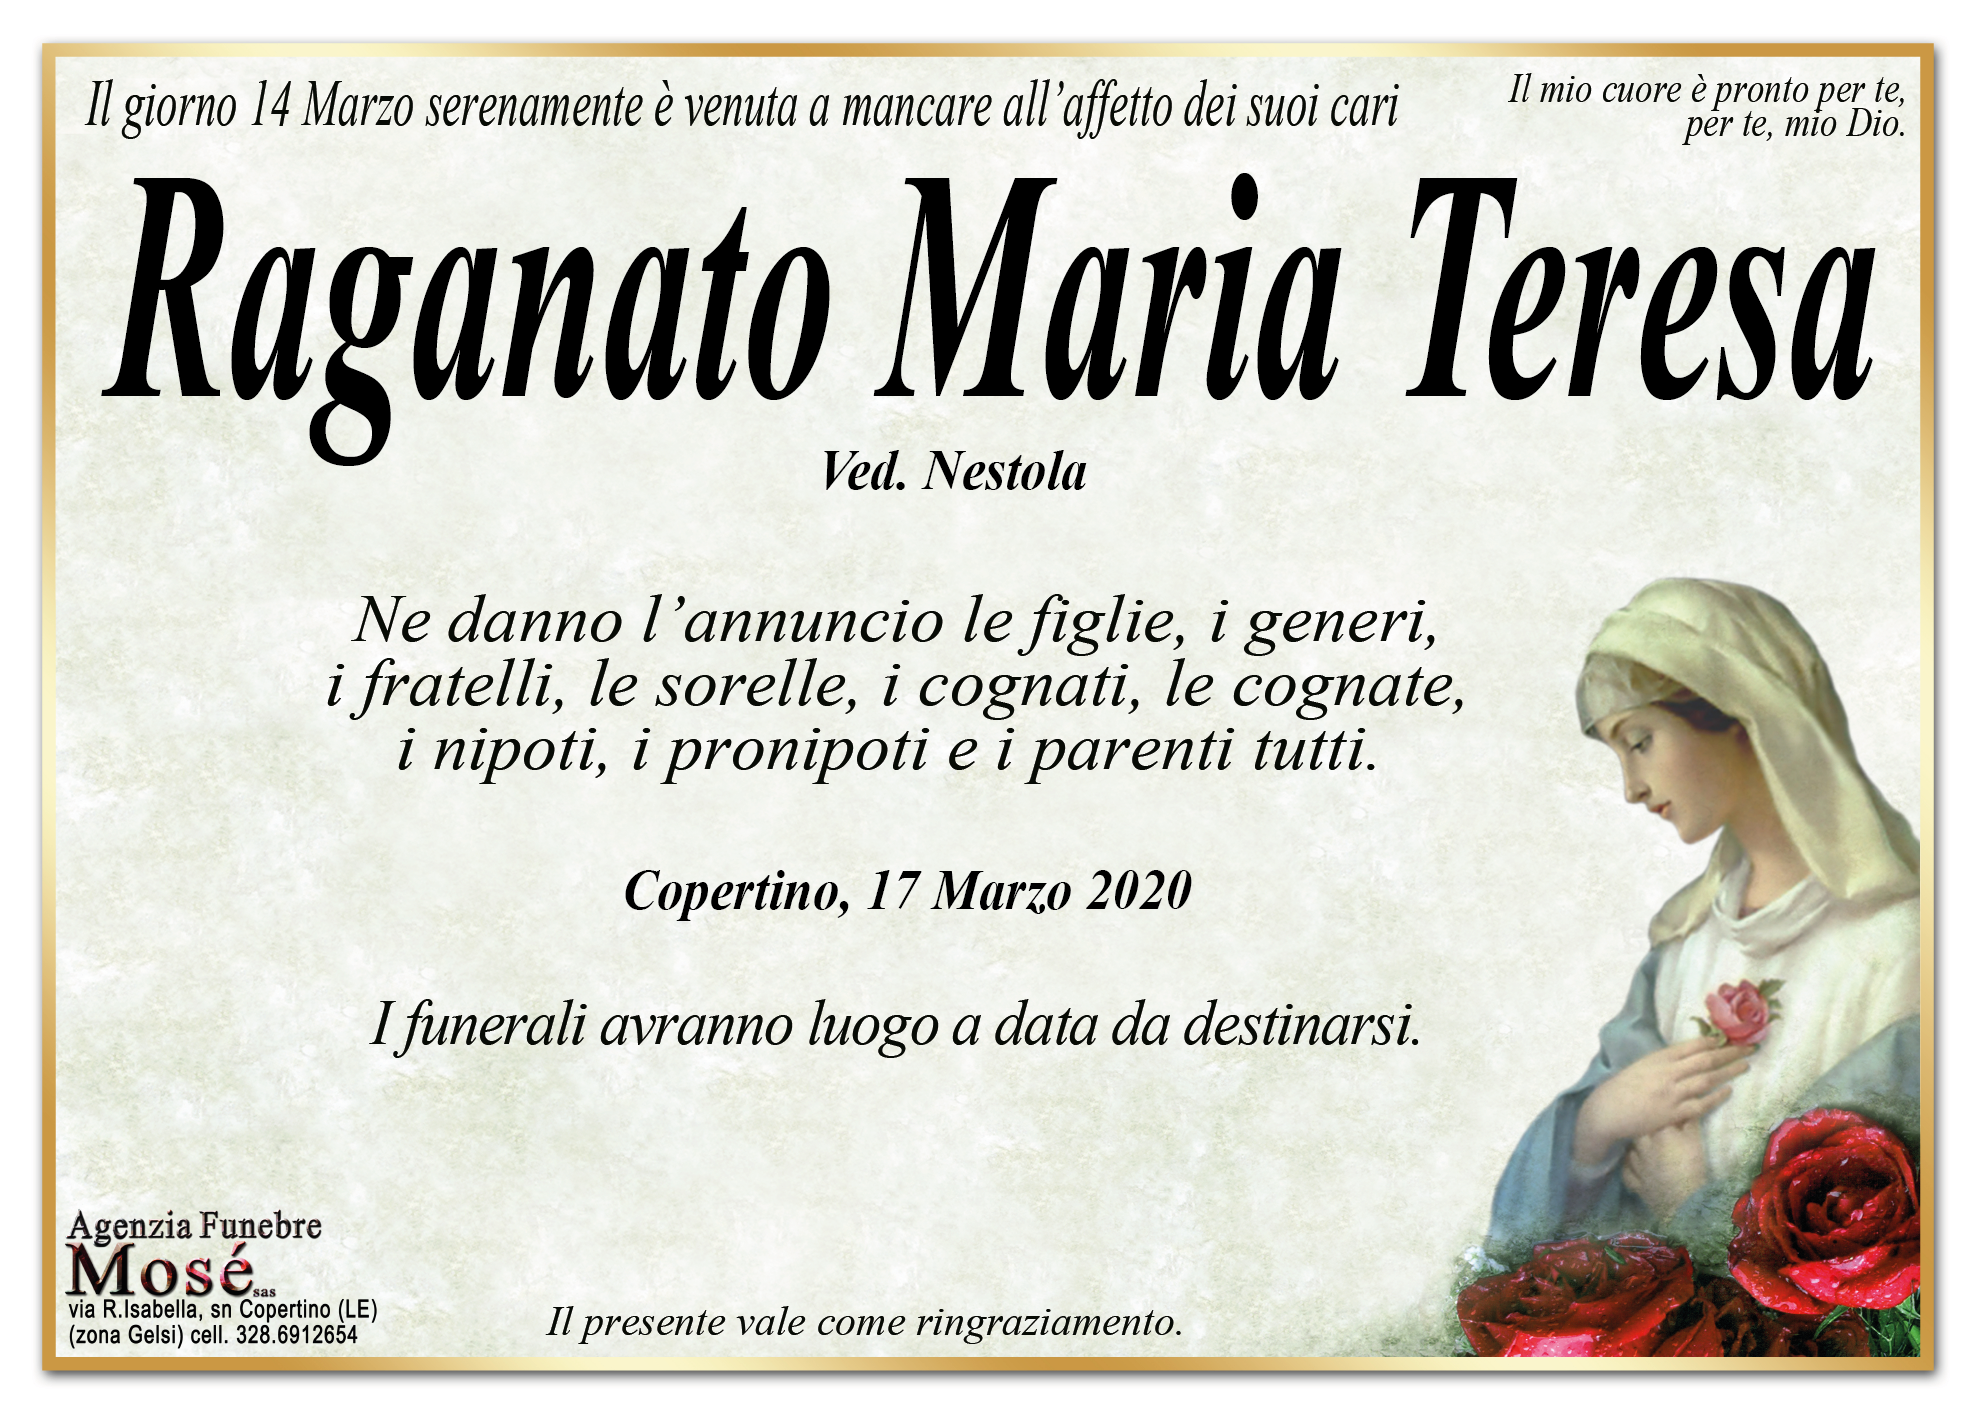 Maria Teresa Raganato